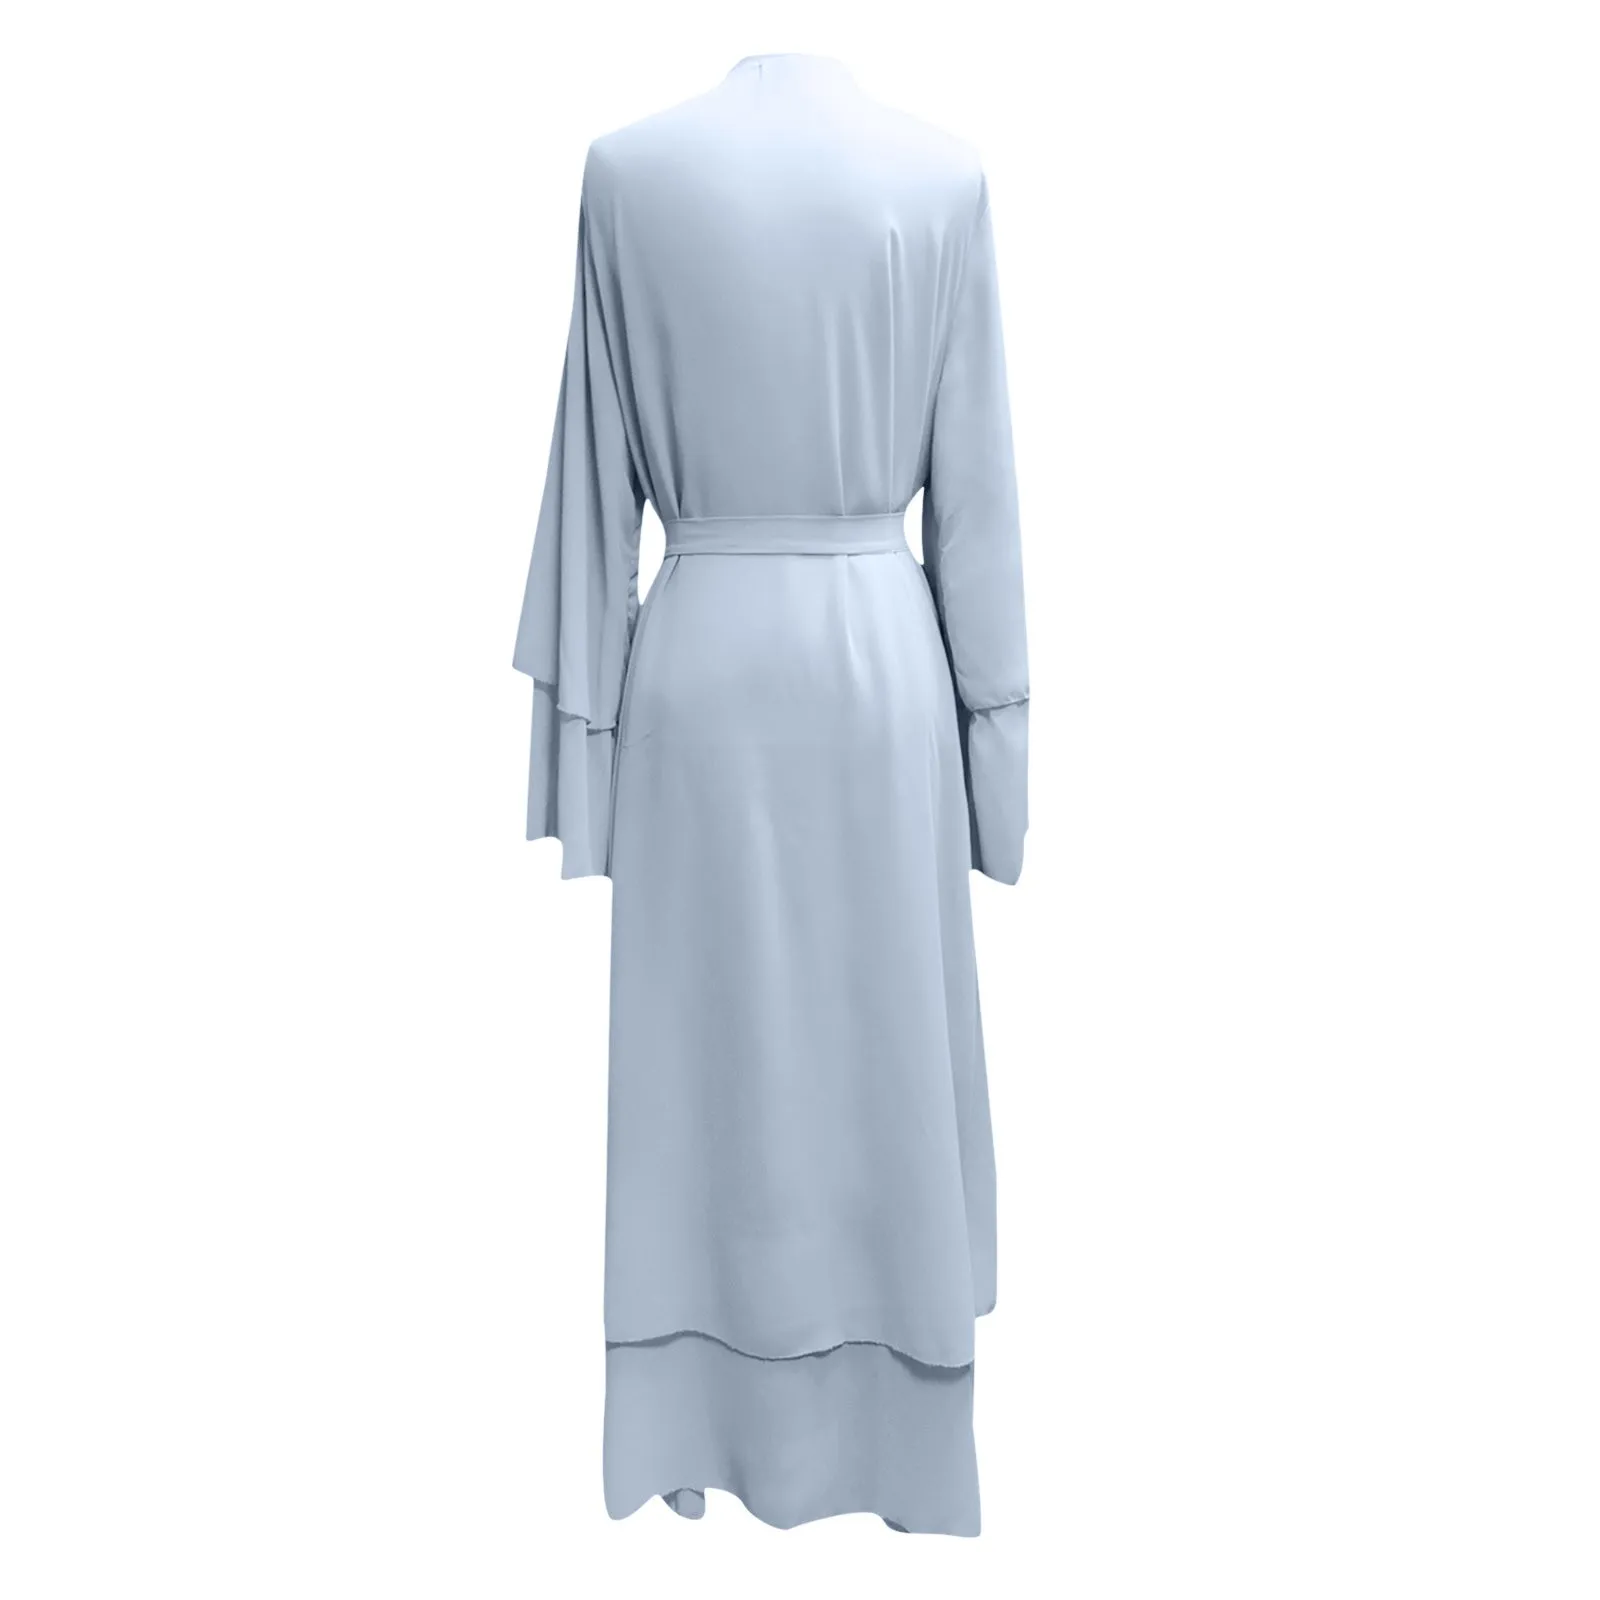 Better Double layer Abaya Kimono Dubai Kaftan Muslim Cardigan Abayas Dresses Women Casual Robe Femme Caftan Islam Clothes